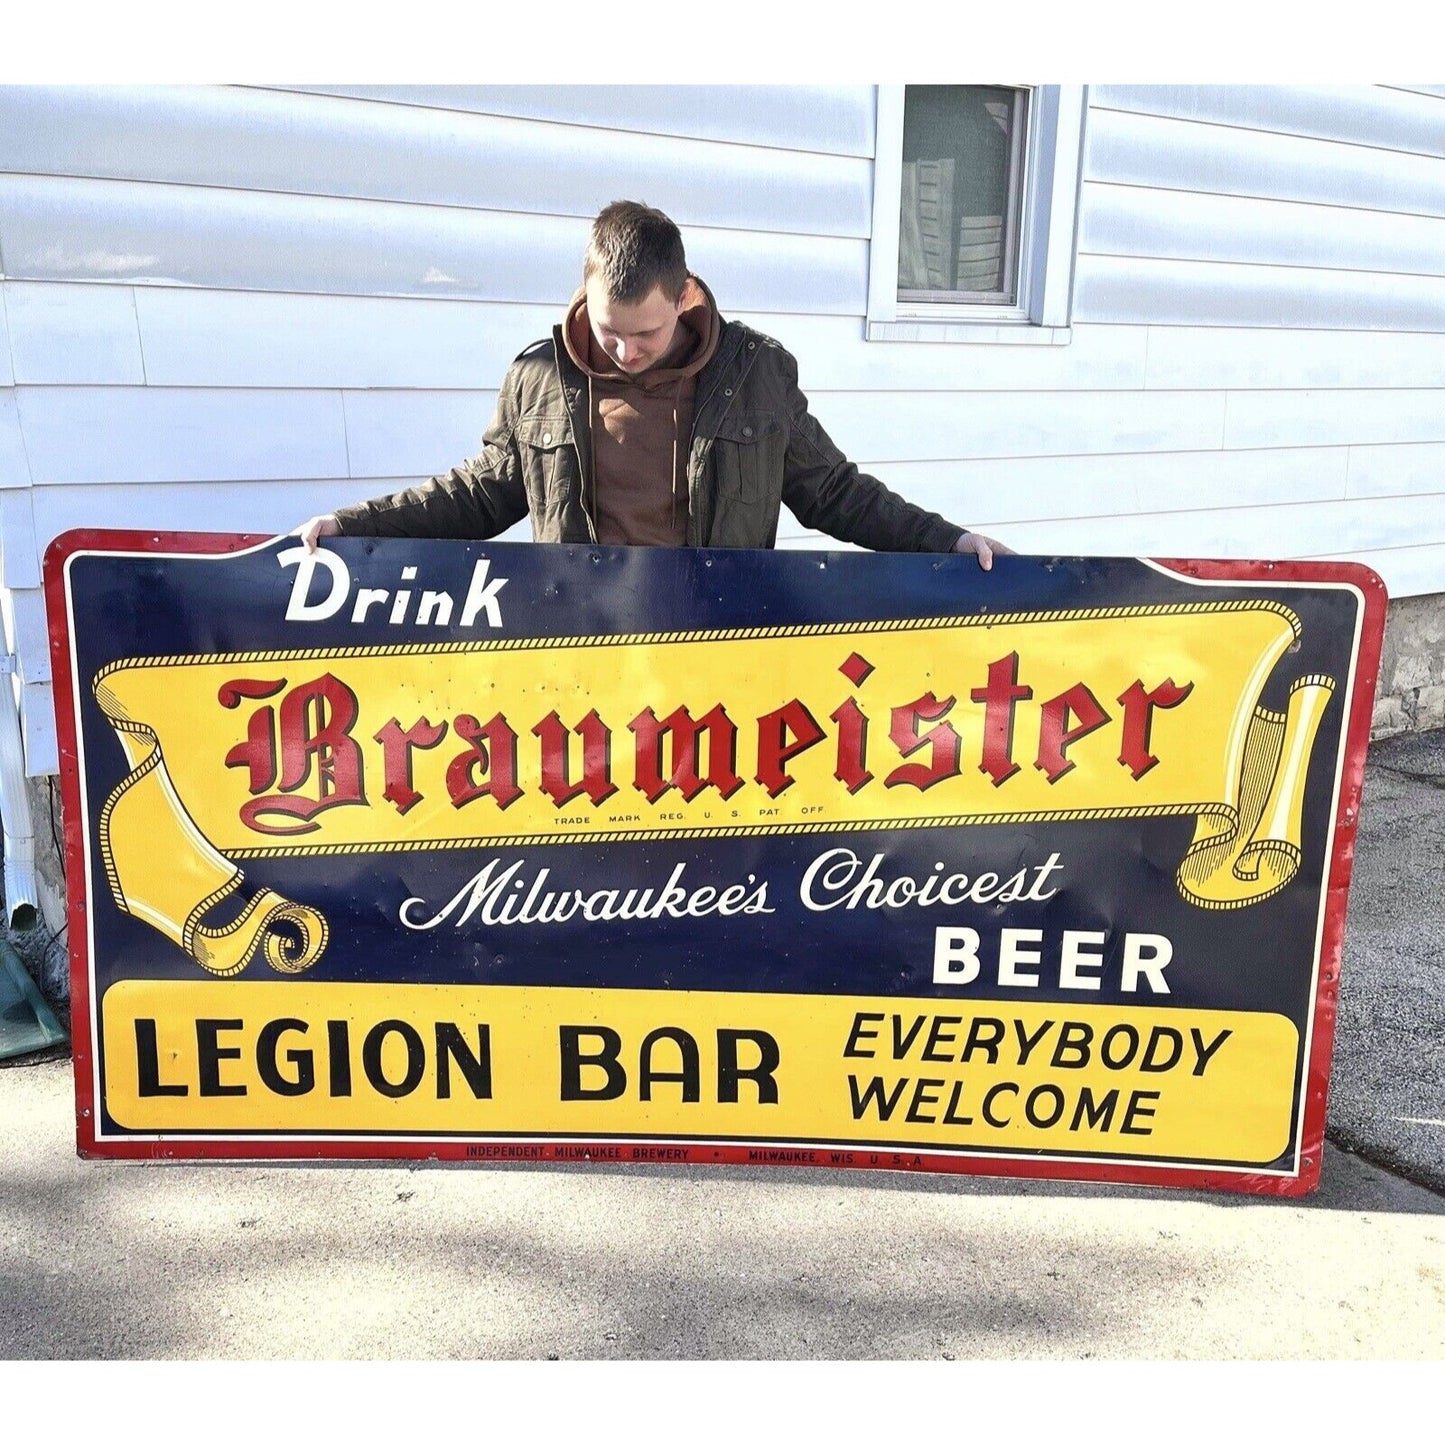 Vintage 1940s Drink Braumeister Milwaukee Beer Metal Advertising Sign 8ft x 5ft